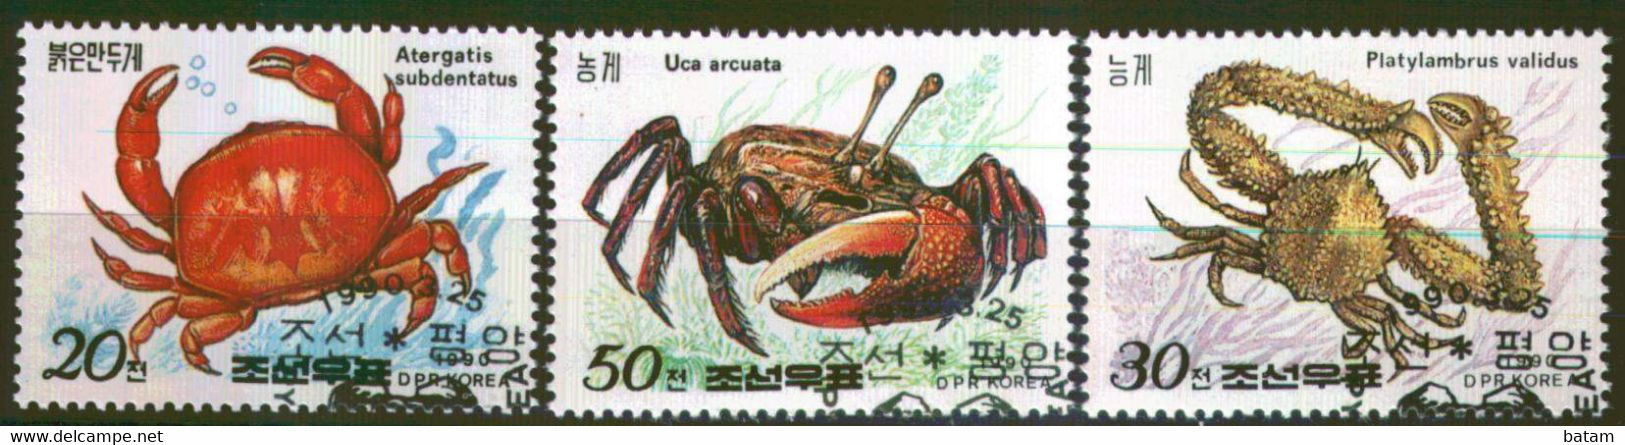 229 - Korea - Crustaceans - Used Set - Crustaceans